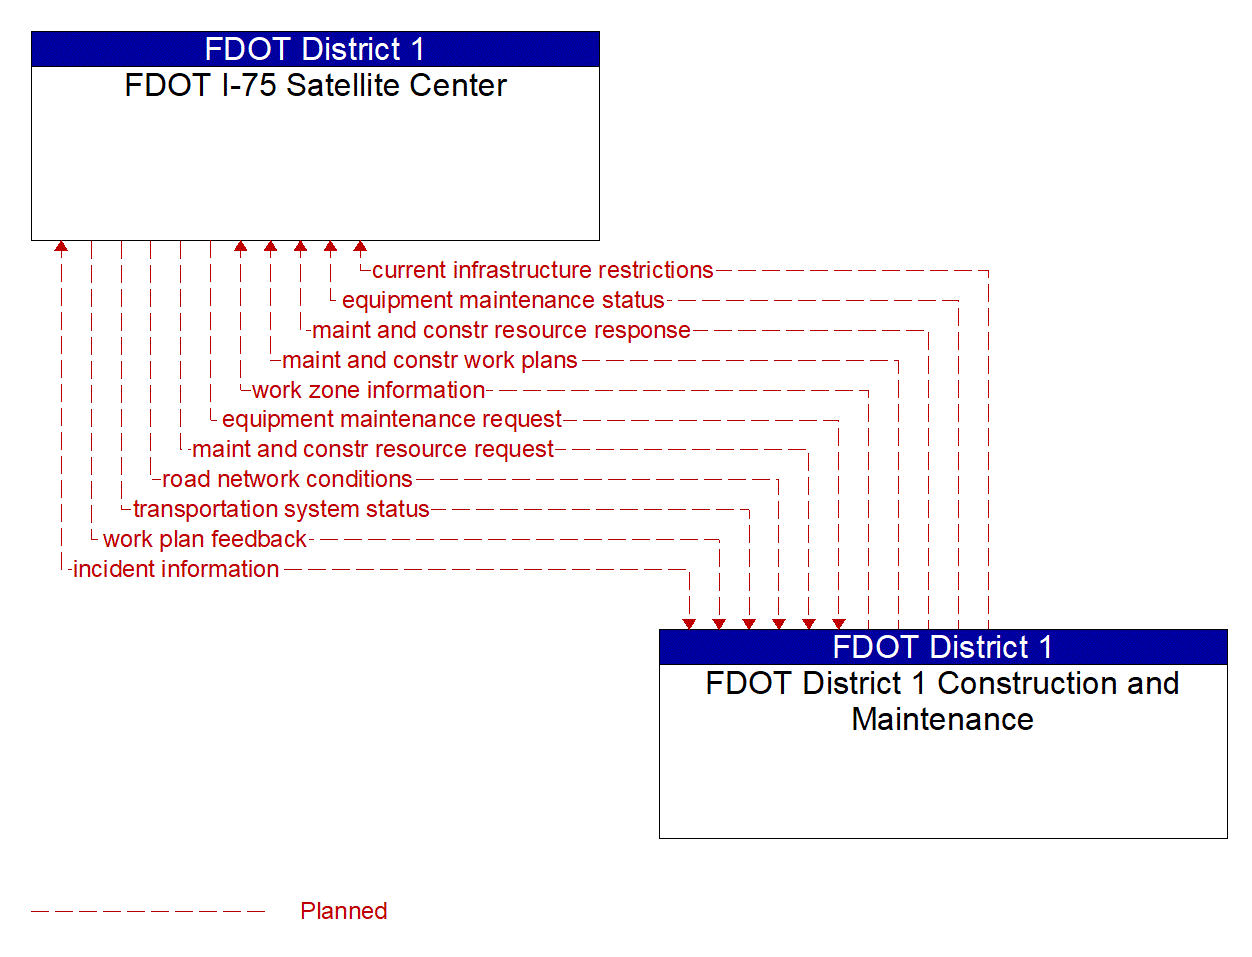 Architecture Flow Diagram: FDOT District 1 Construction and Maintenance <--> FDOT I-75 Satellite Center